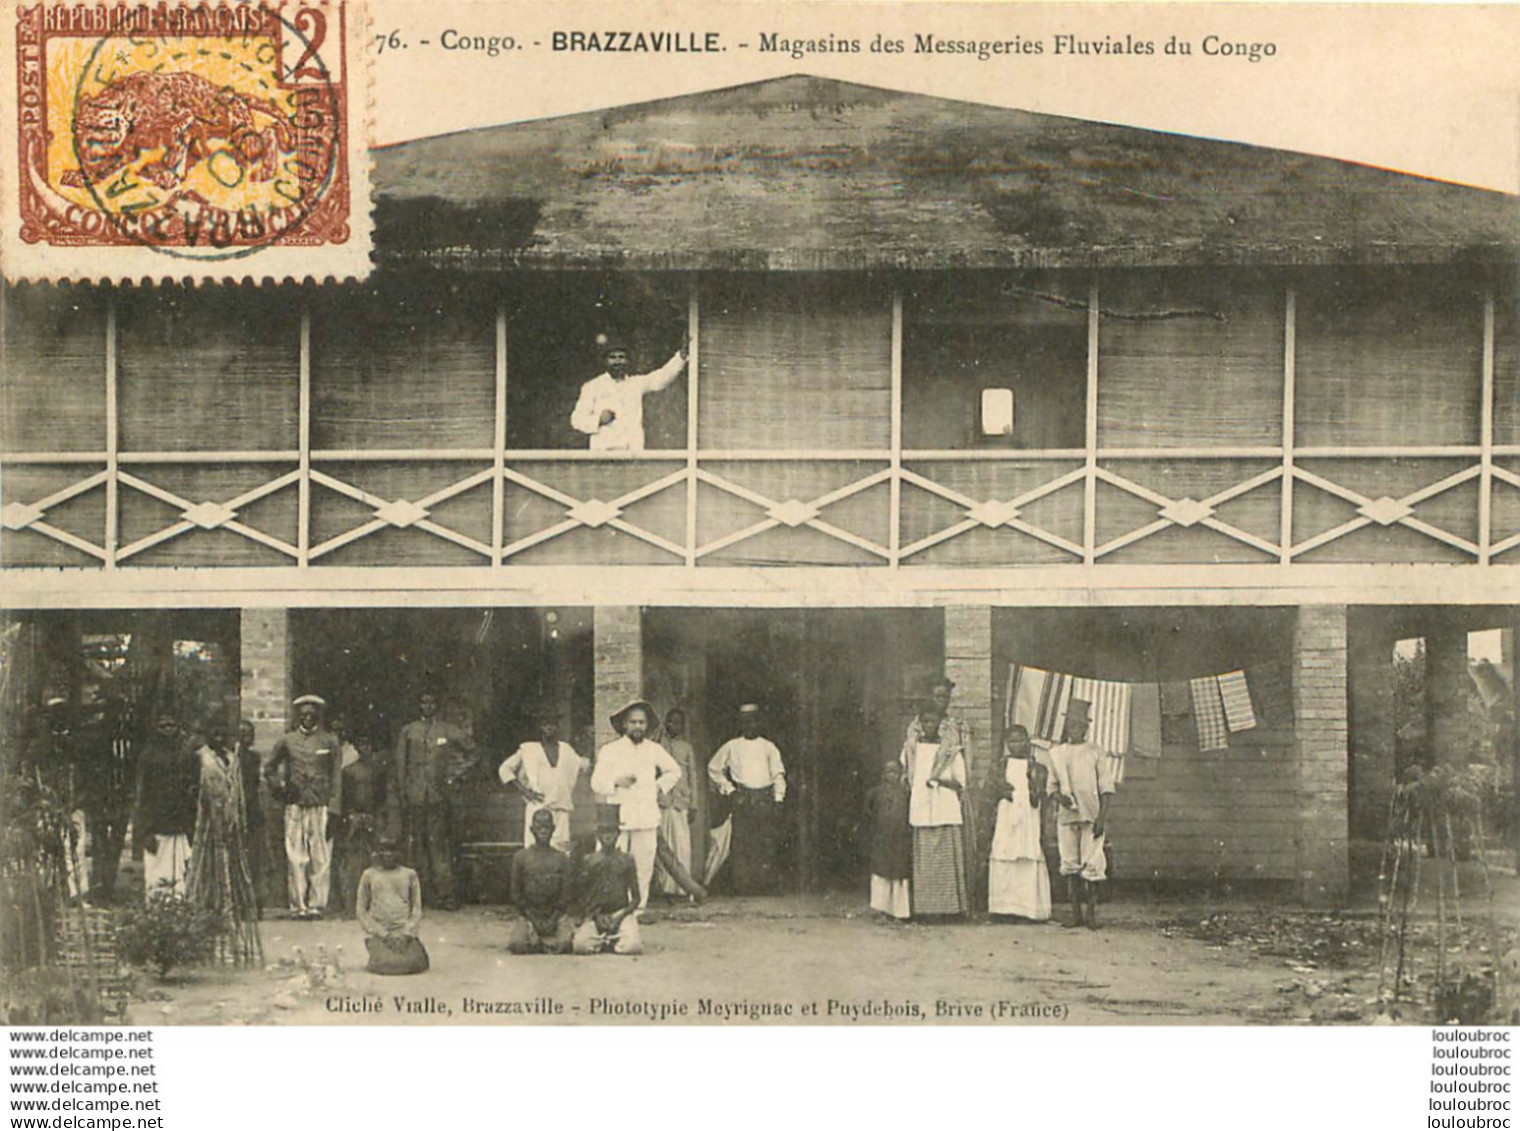 CONGO BRAZZAVILLE MAGASINS DES MESSAGERIES FLUVIALES DU CONGO EDITION VIALLE - Brazzaville